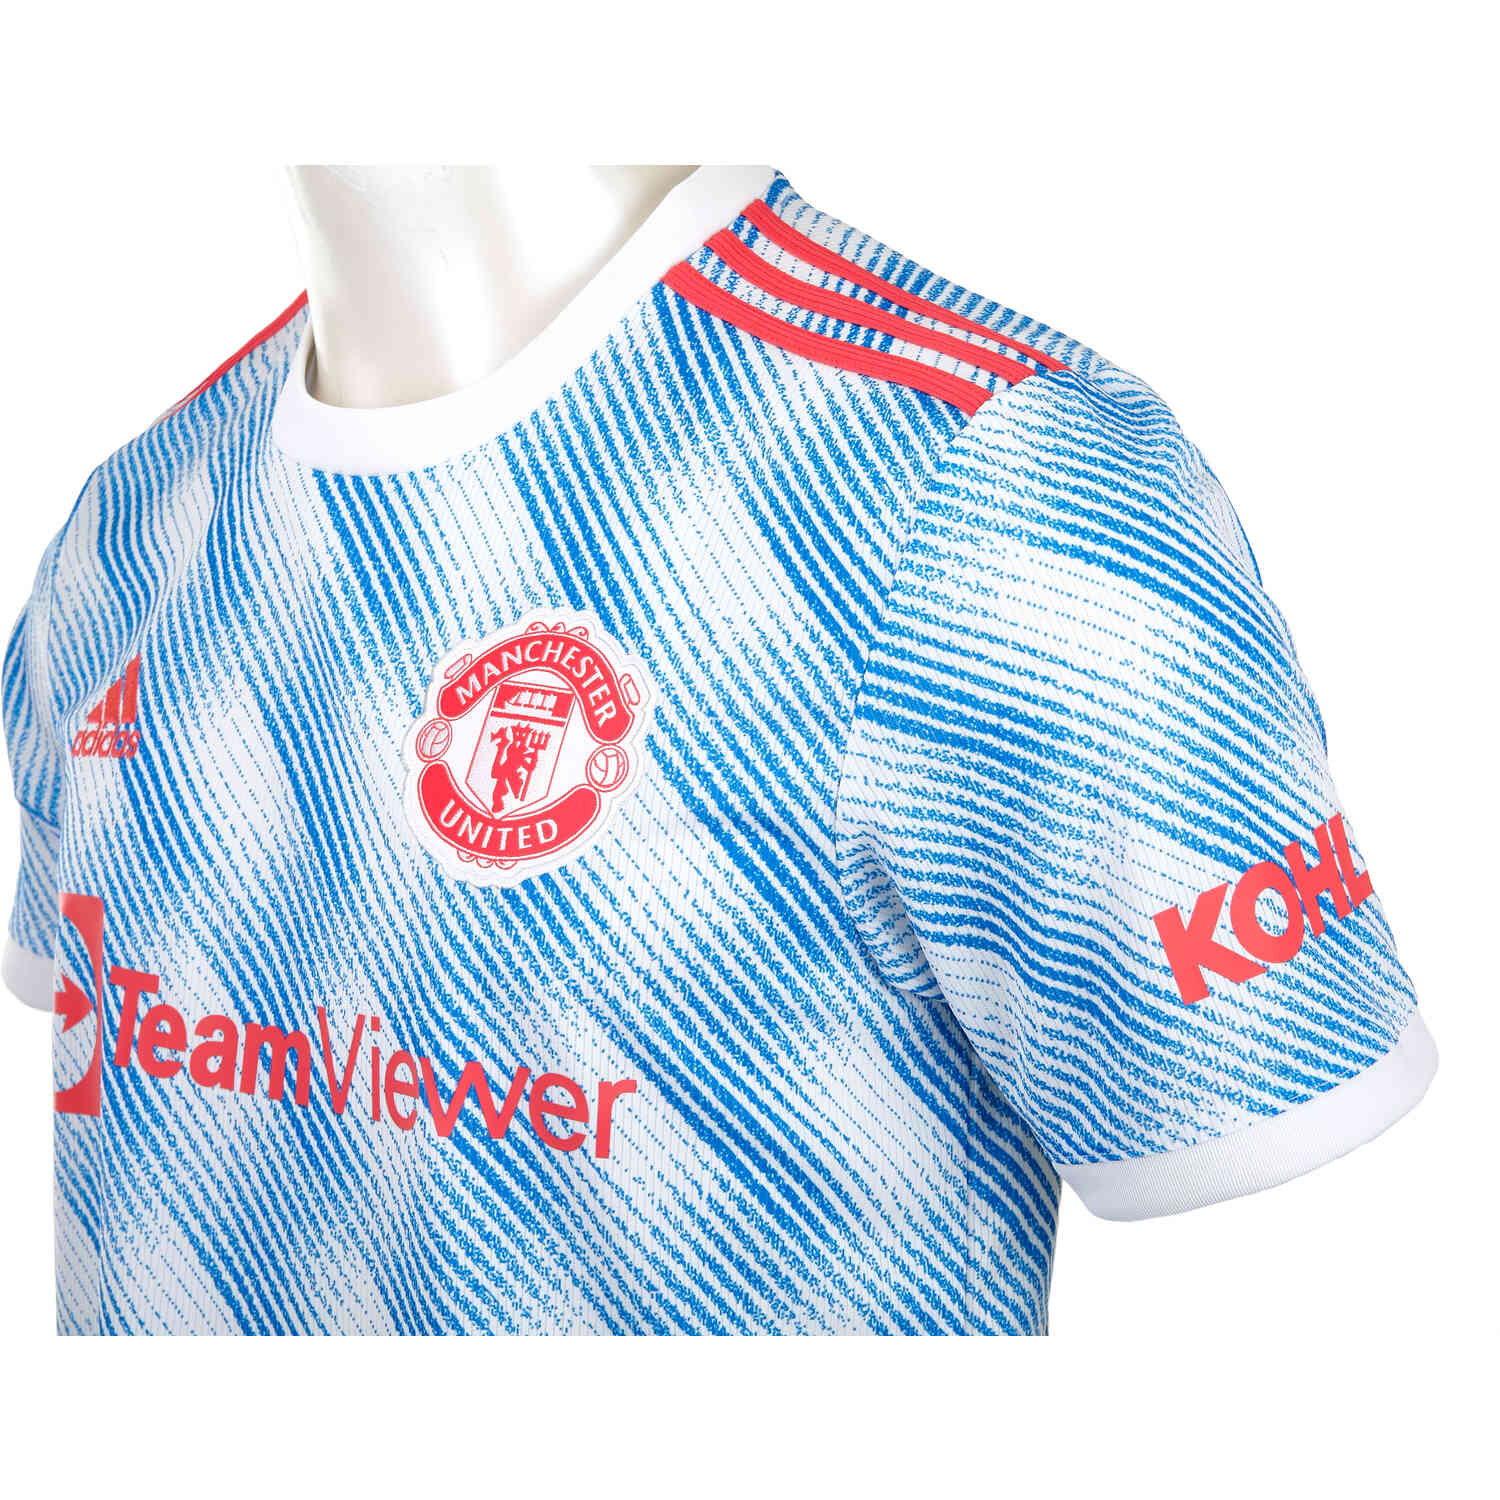 2021/22 adidas Manchester United Away Jersey - SoccerPro